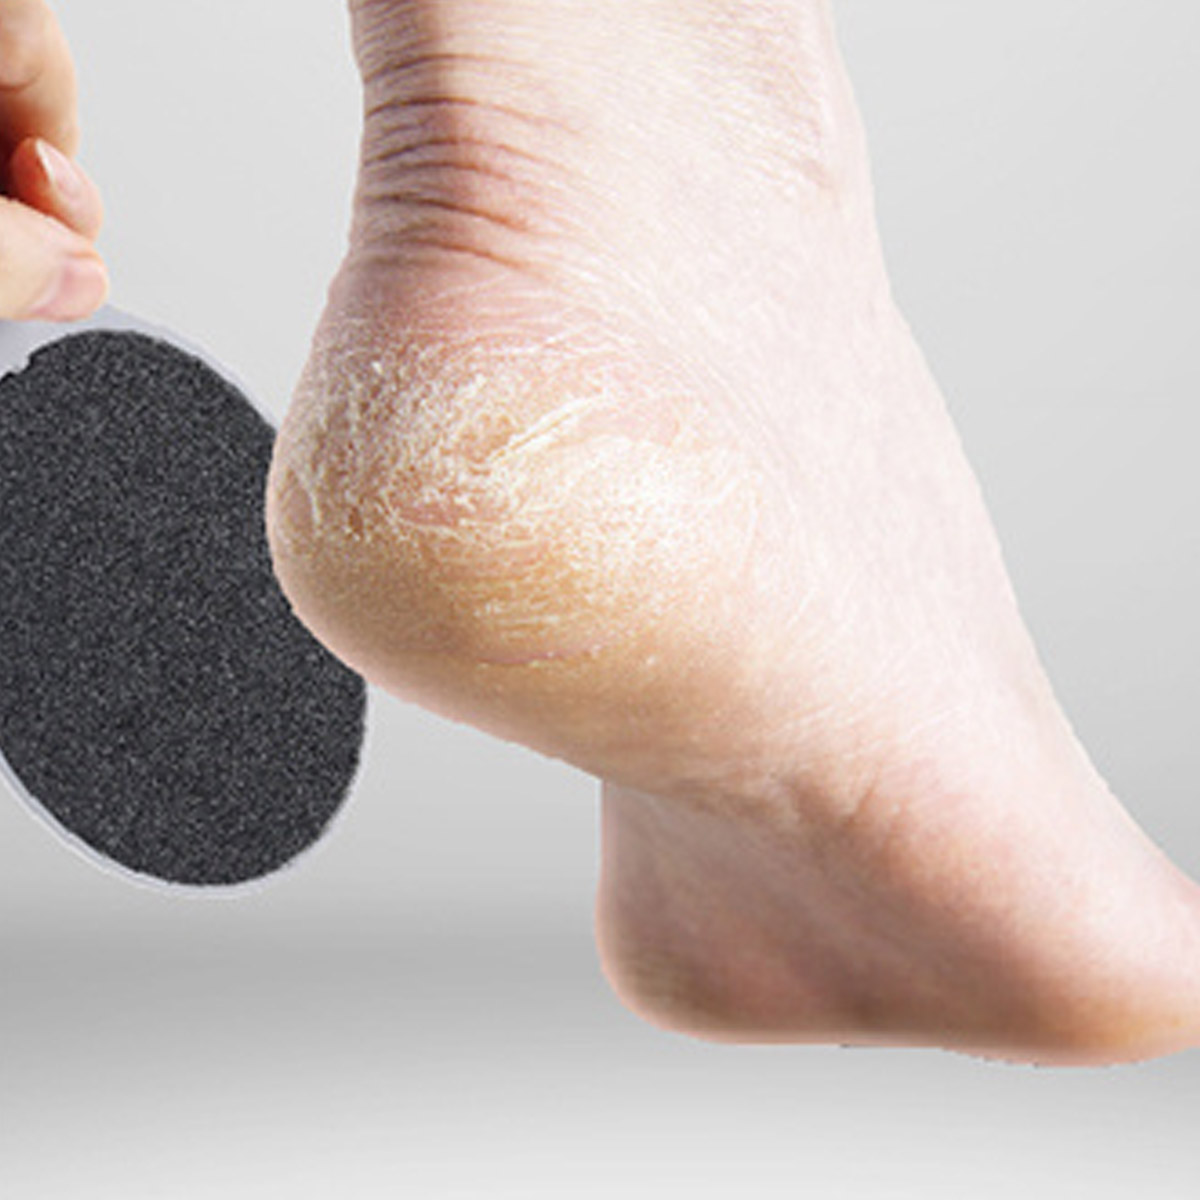 dry heel skin removal